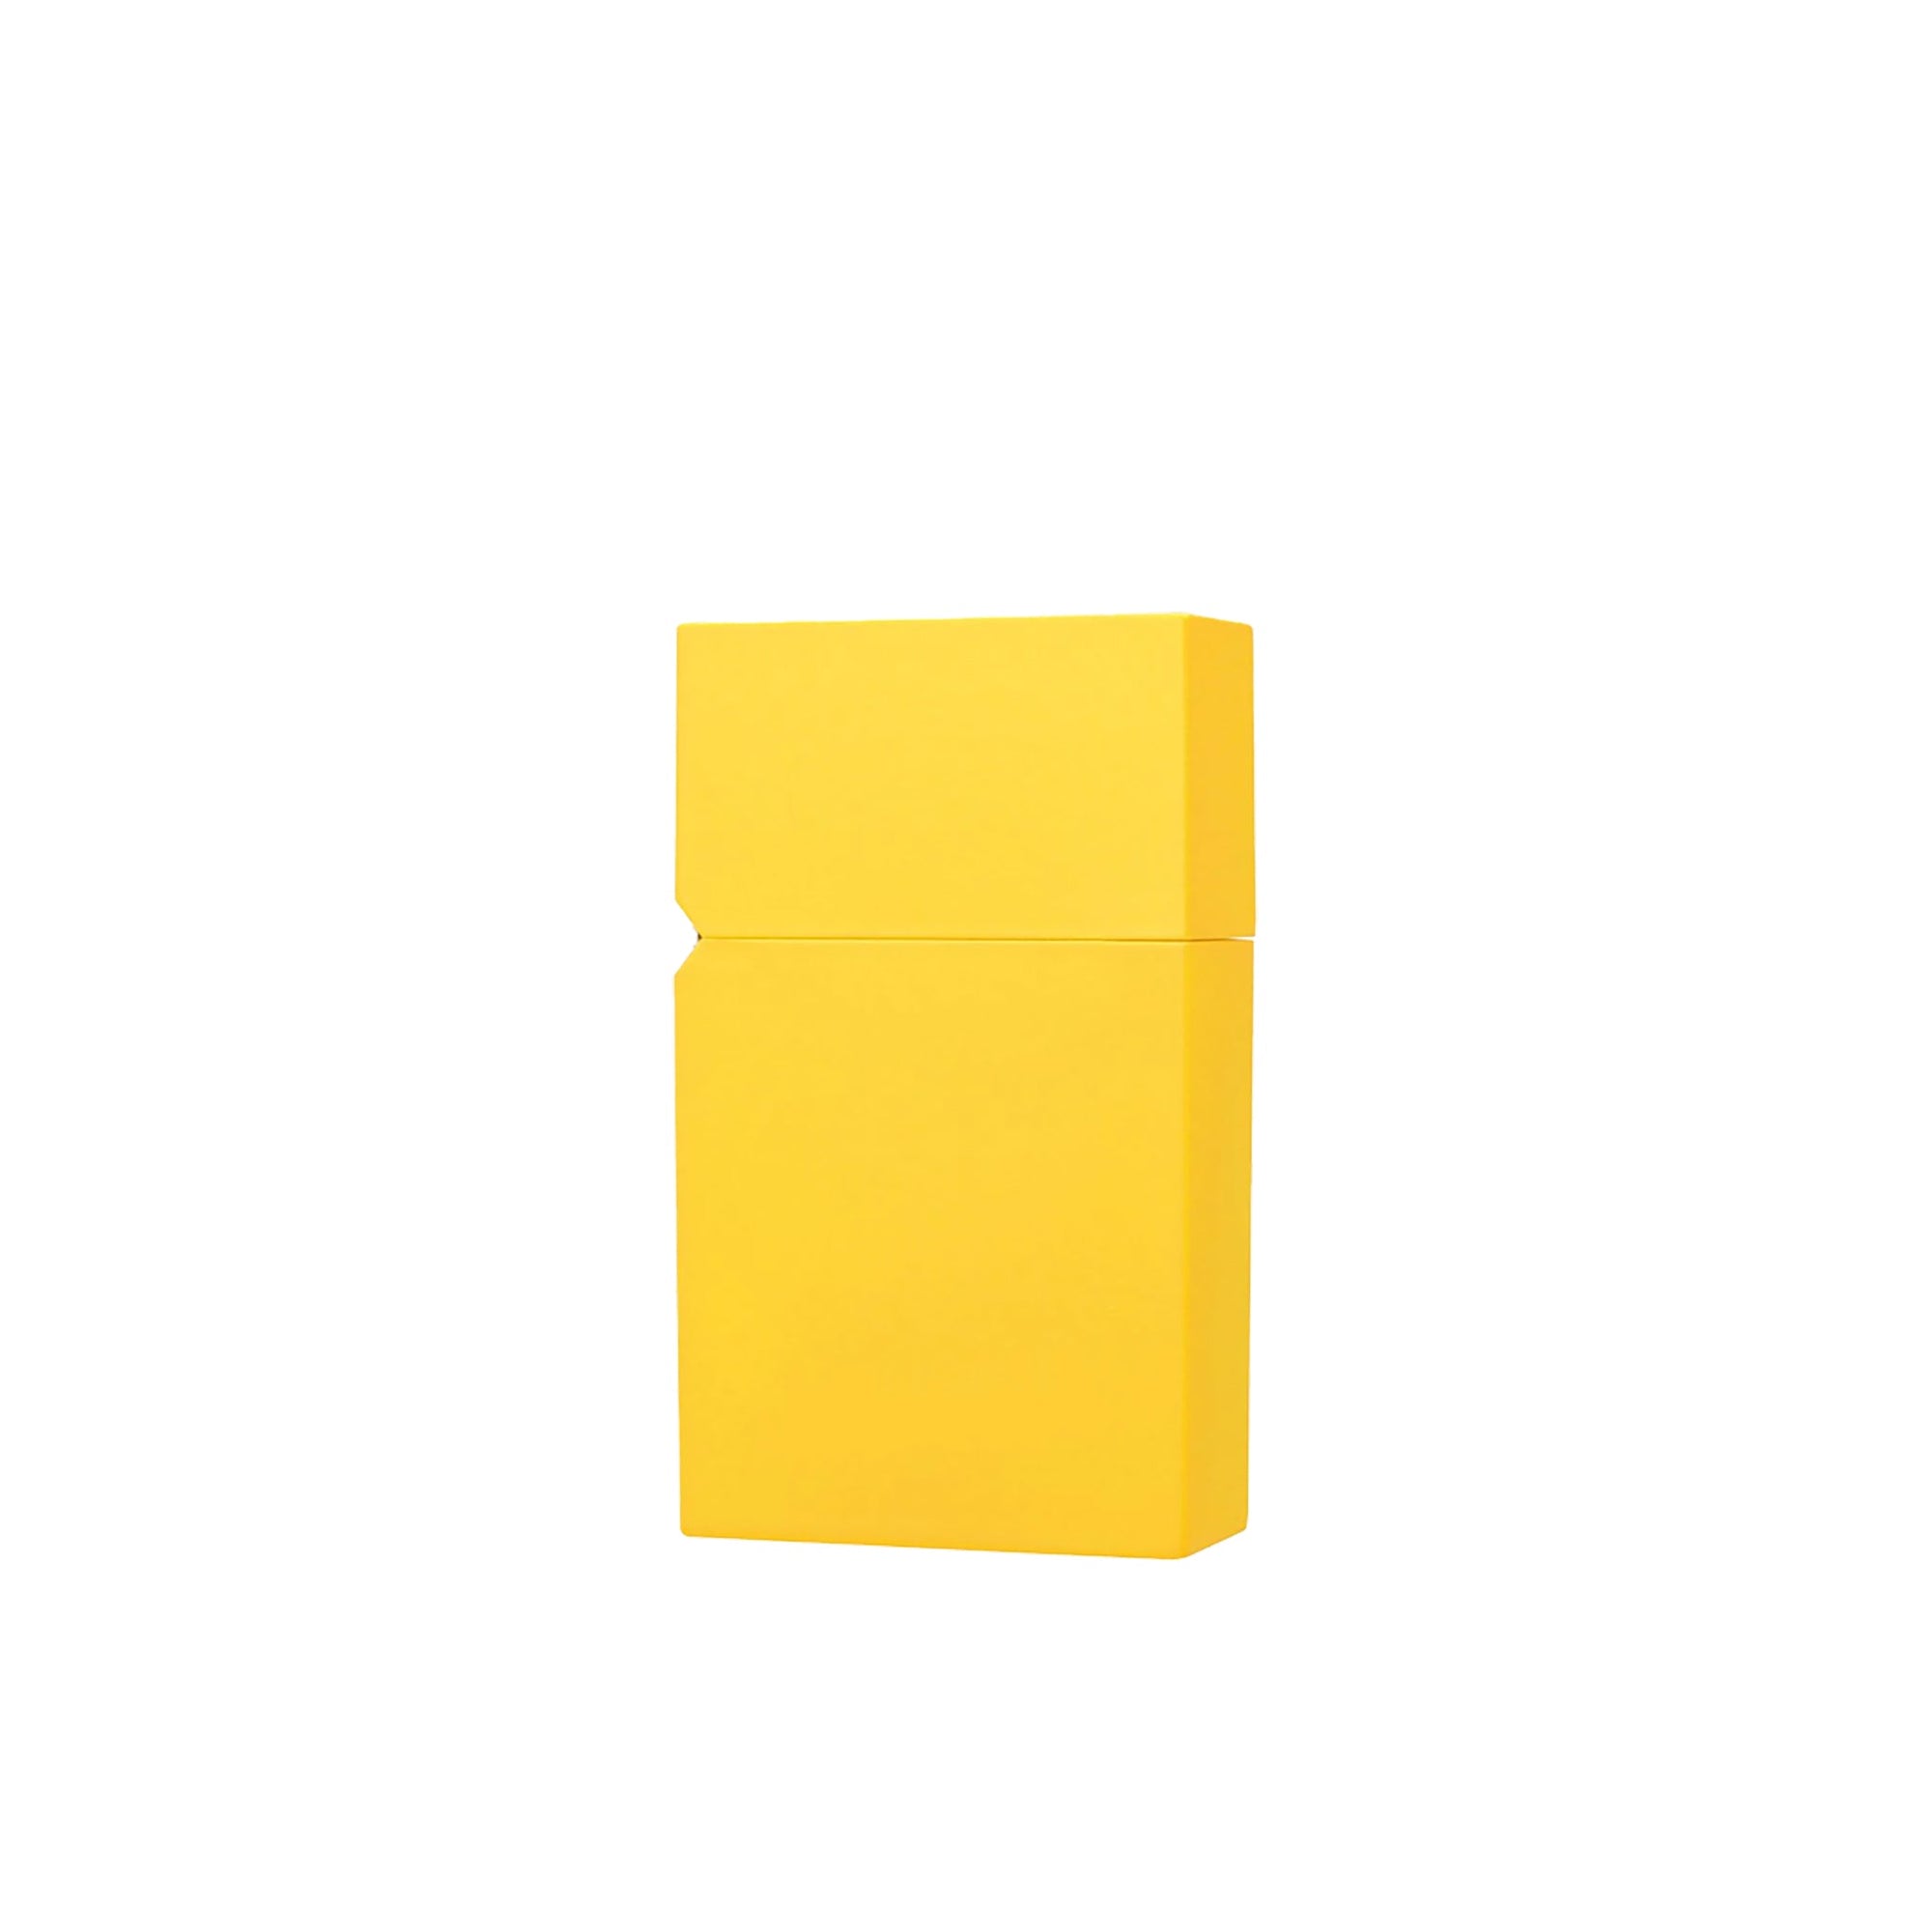 Hard-Edge Lighter - Yellow - Space Camp